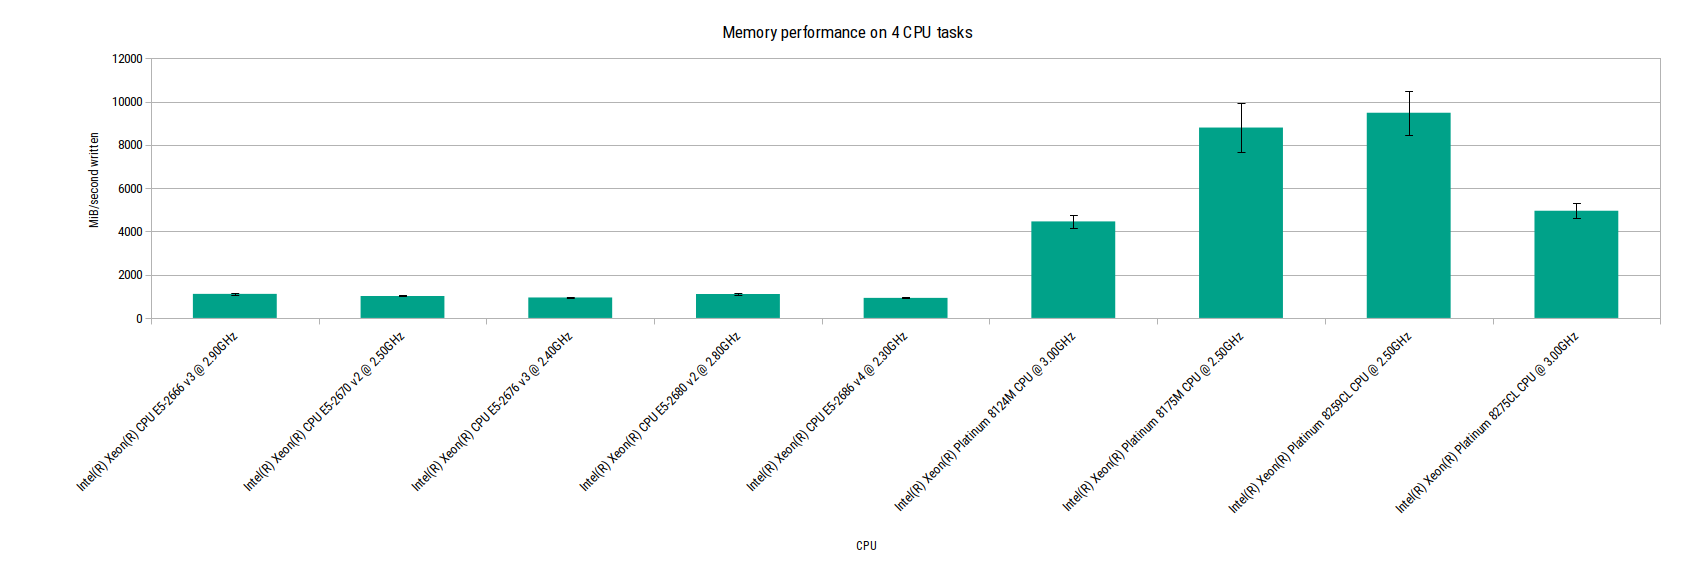 Memory performance on 4 CPU tasks